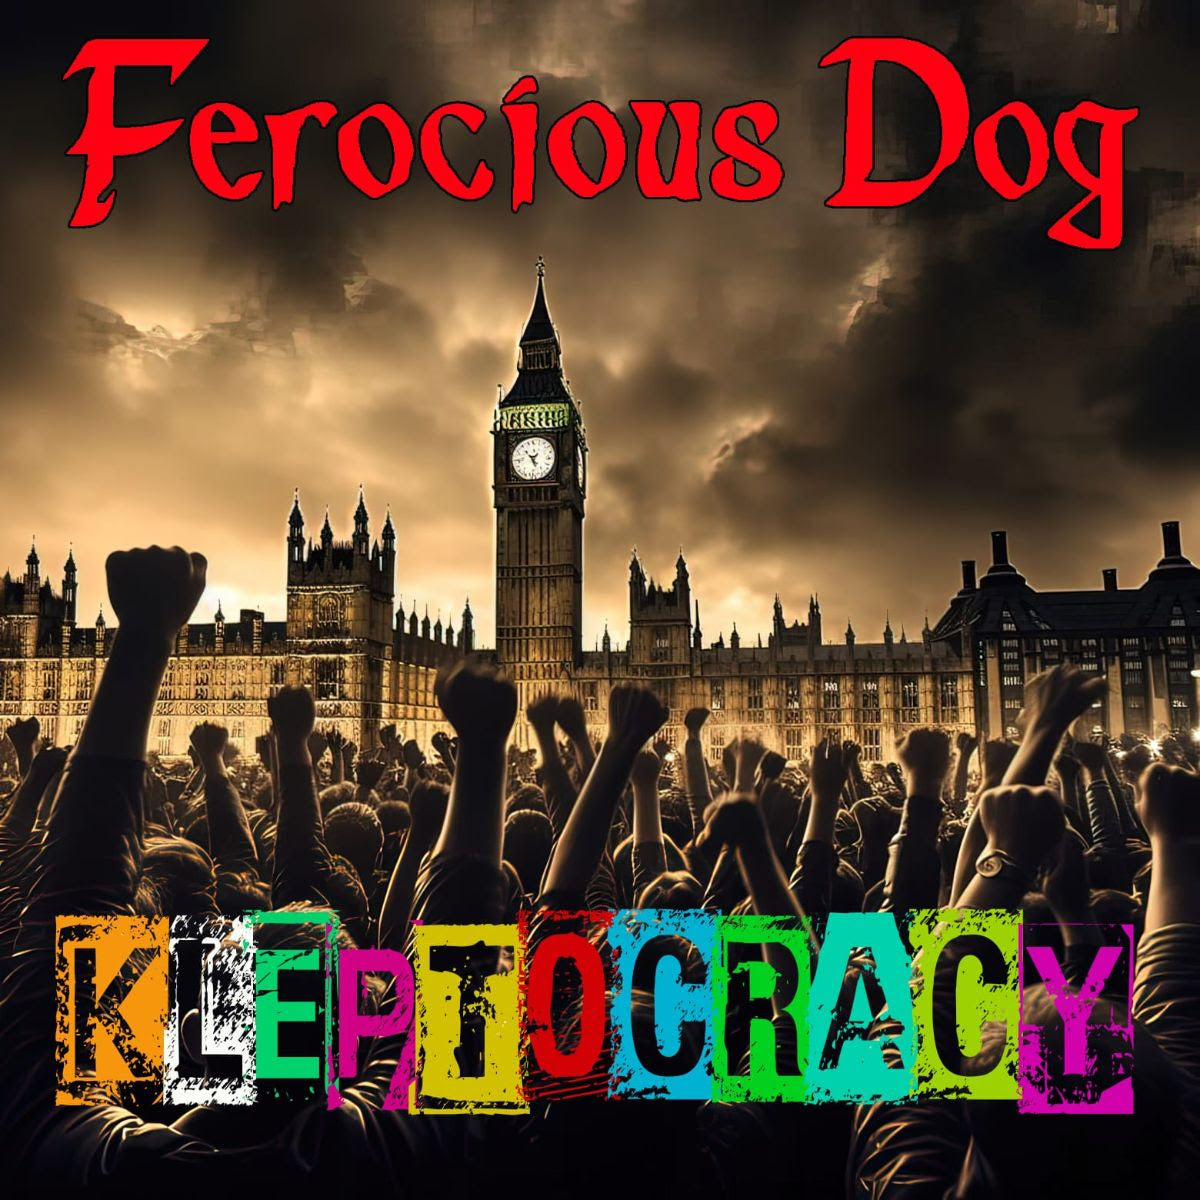 FEROCIOUS DOG - Kleptocracy - CD [MAY 17]